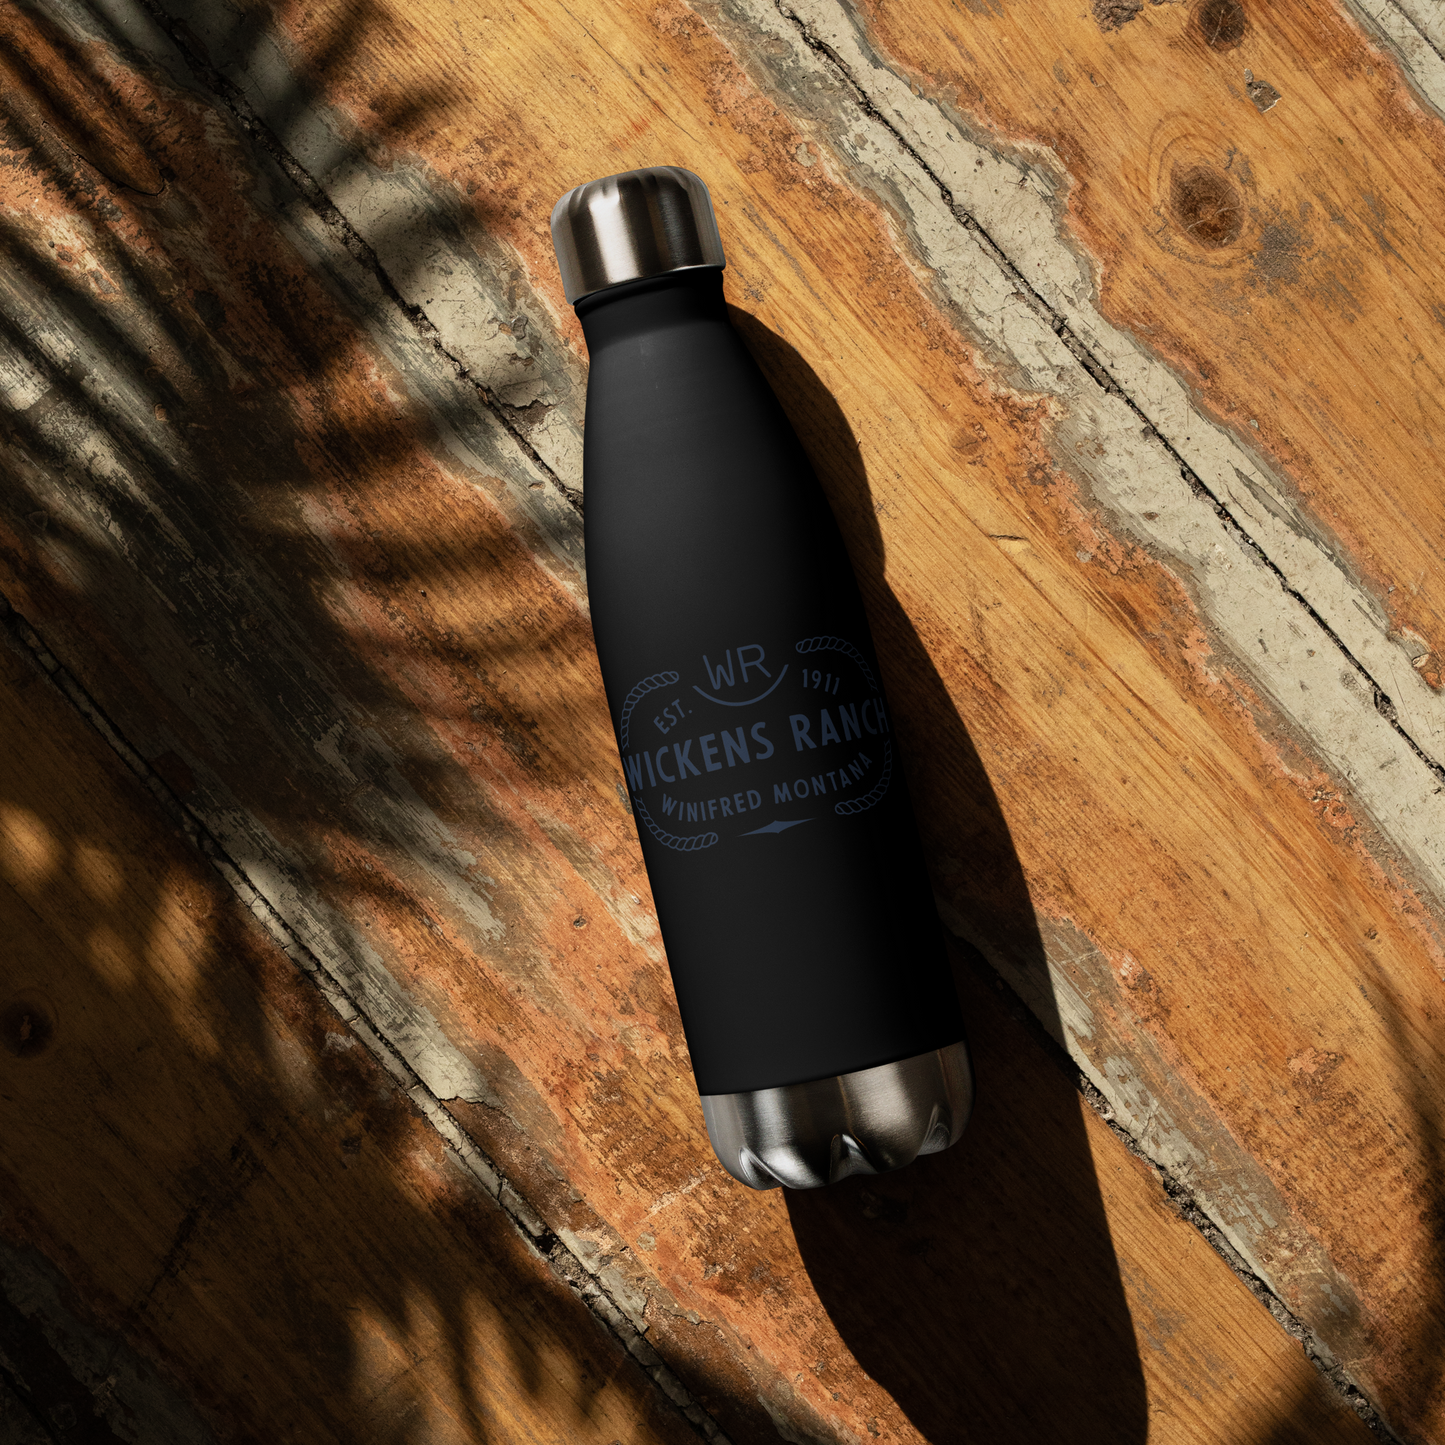 Wickens Ranch Stainless Steel Water Bottle